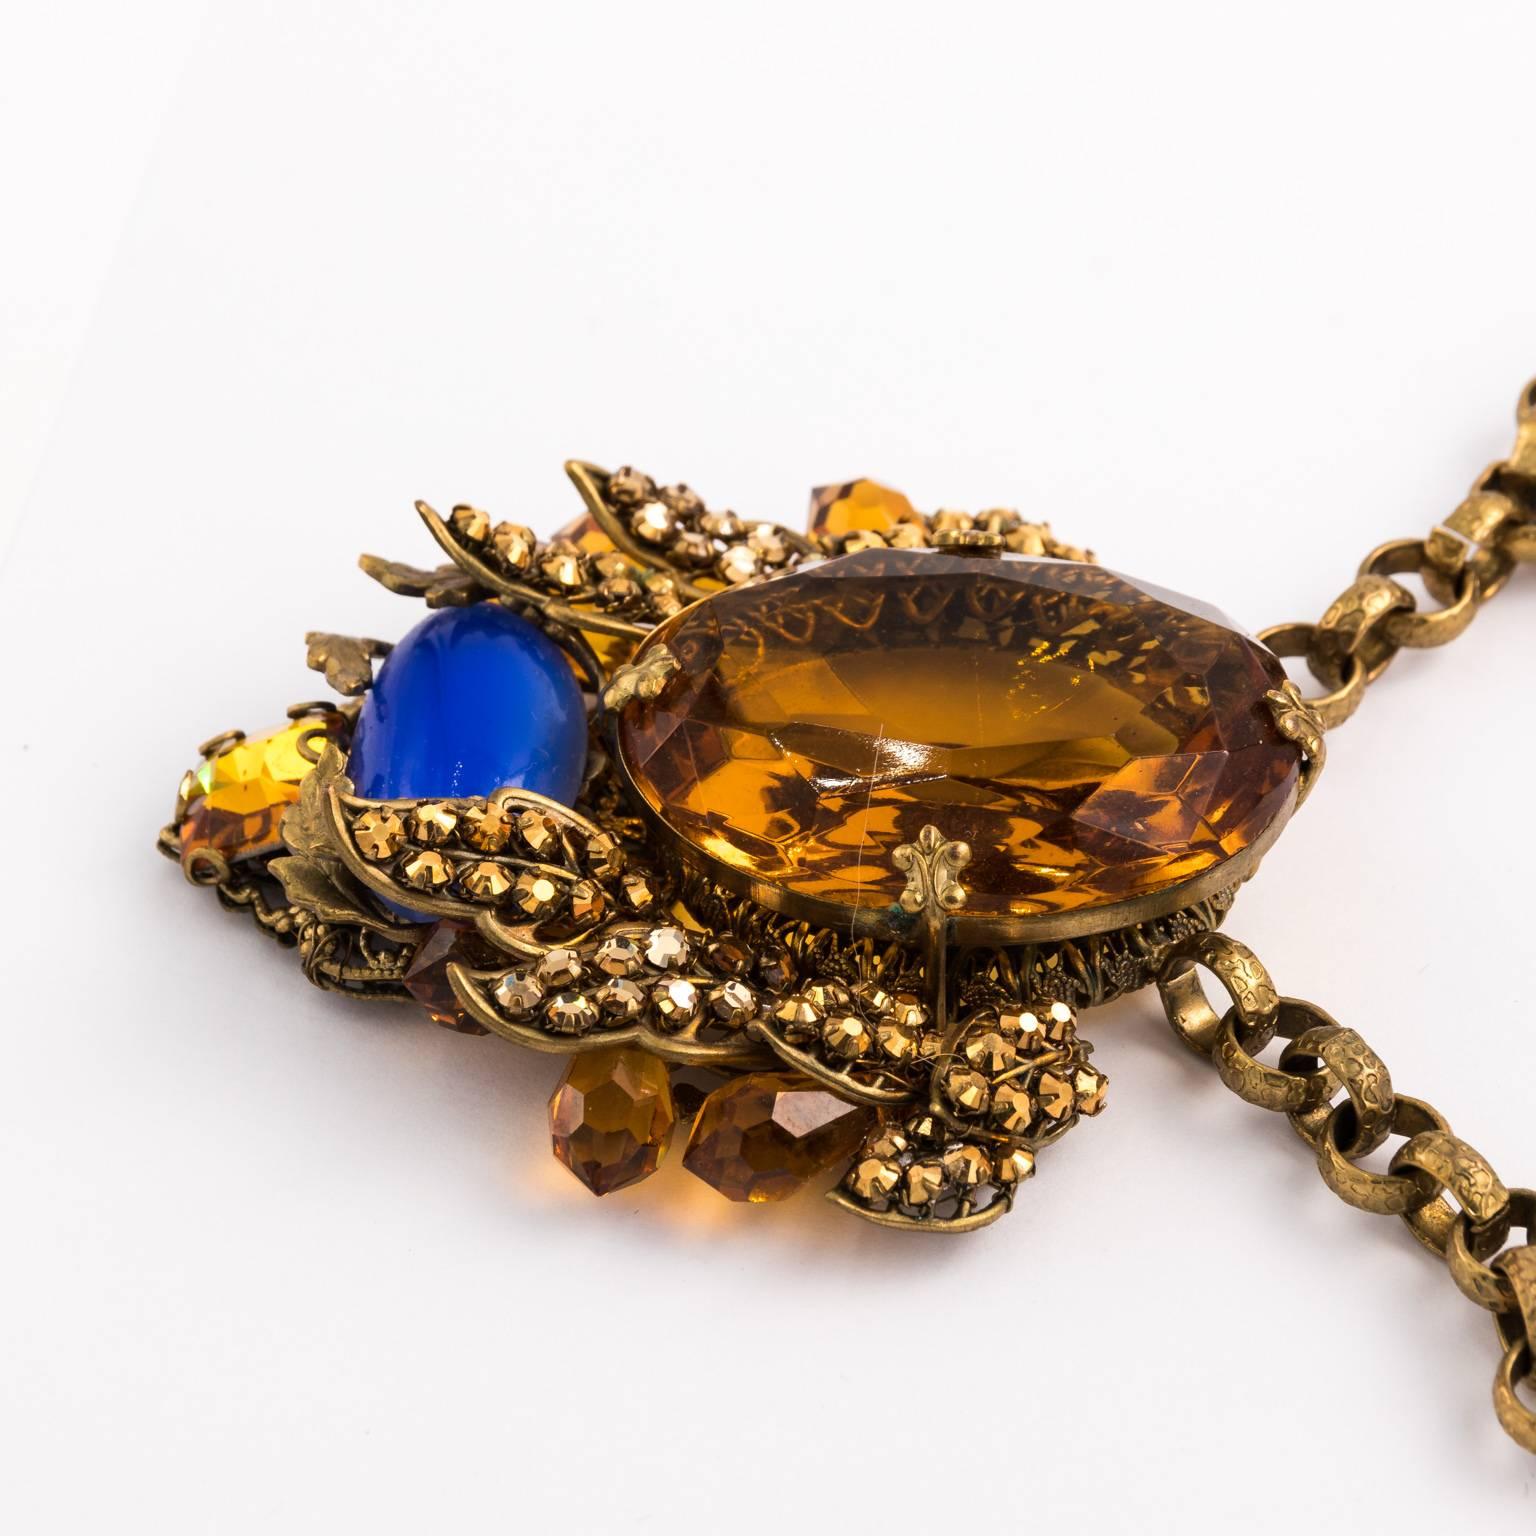 Women's Bijoux Heart Necklace with Large Citrine Glass Centre Piece by Dita Von Teese